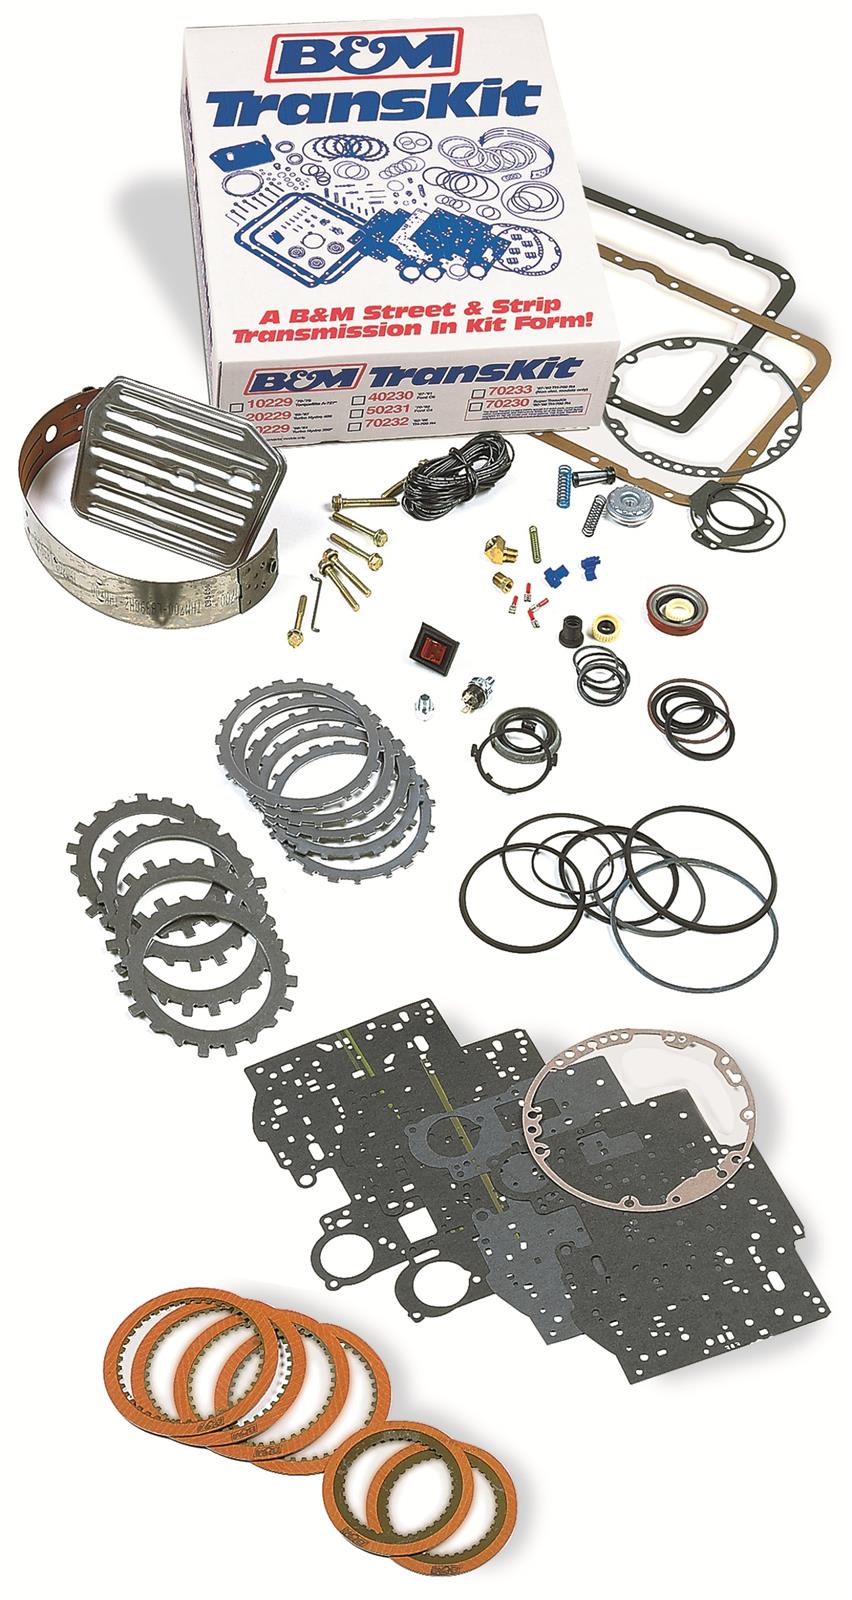 B/&M 50229 Transpak Automatic Transmission Recalibration Kit